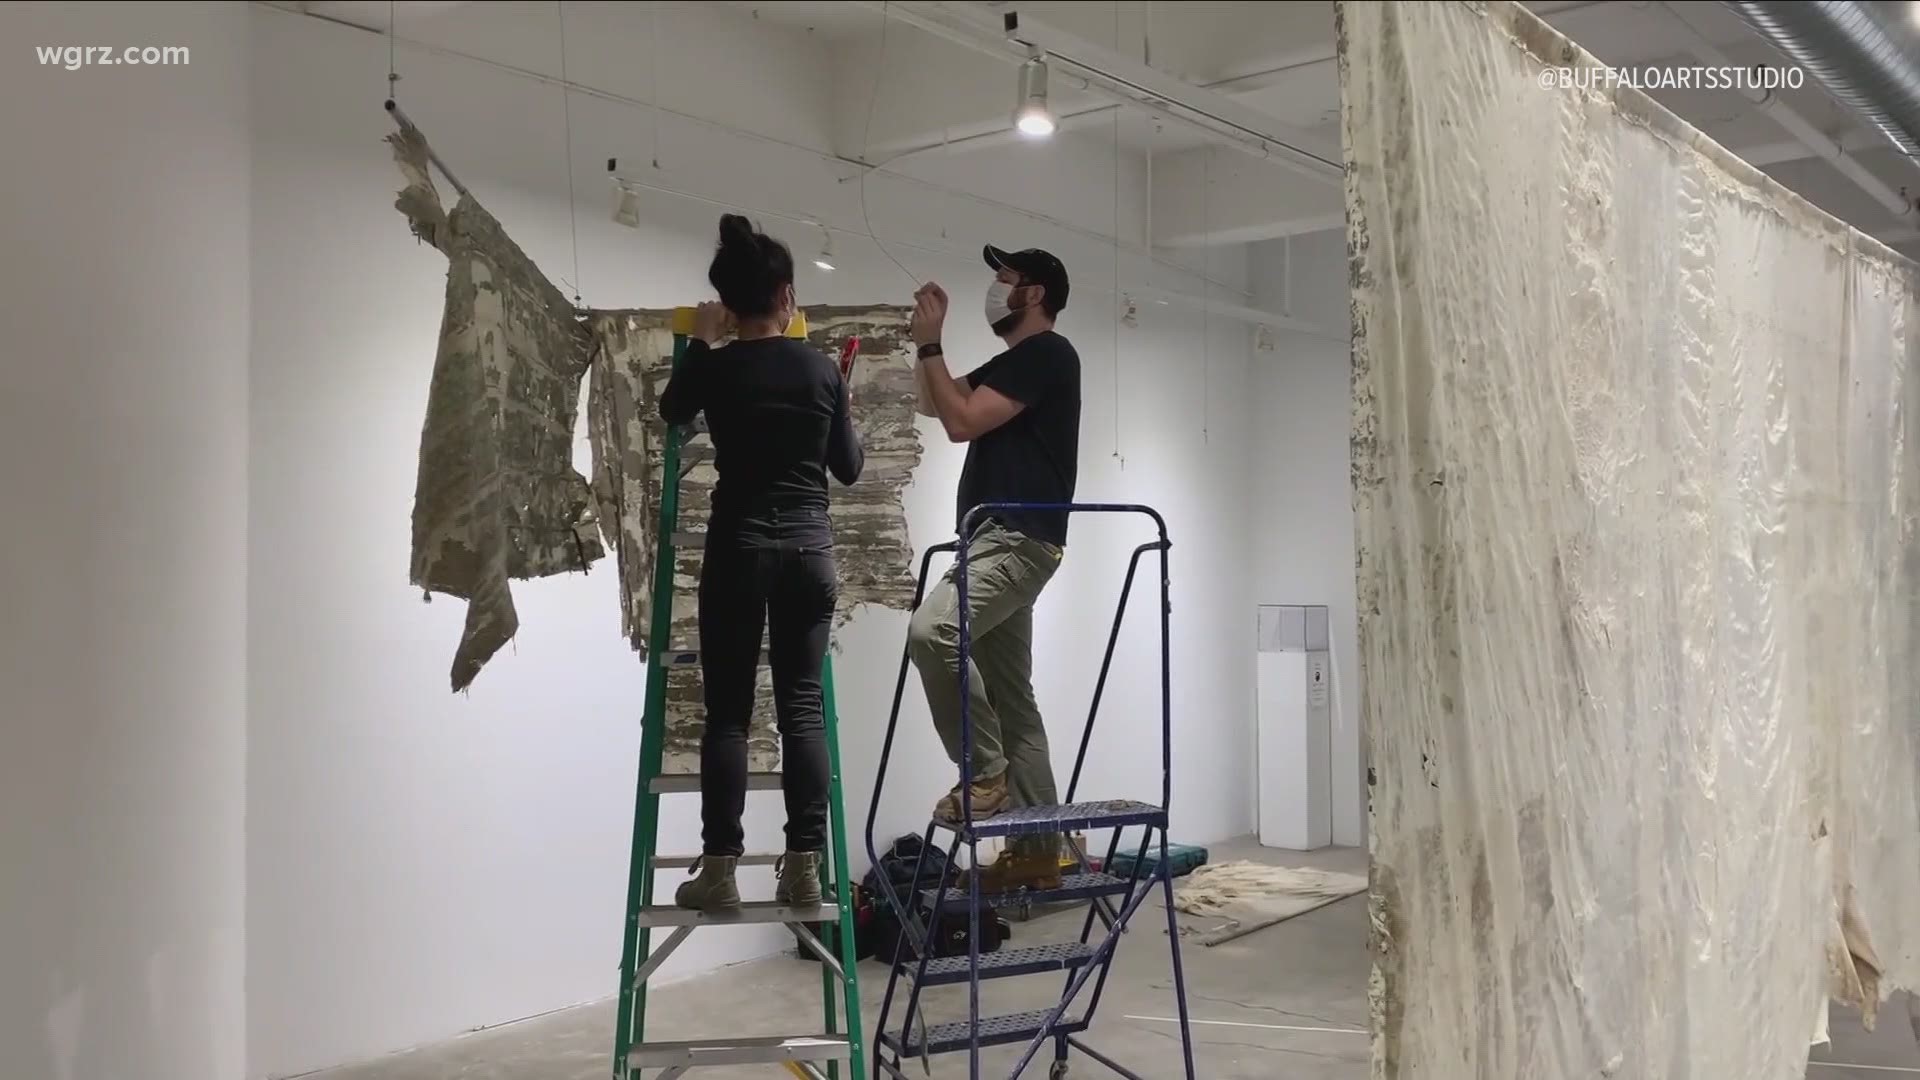 Most Buffalo: 'Buffalo Arts Studio new installation'